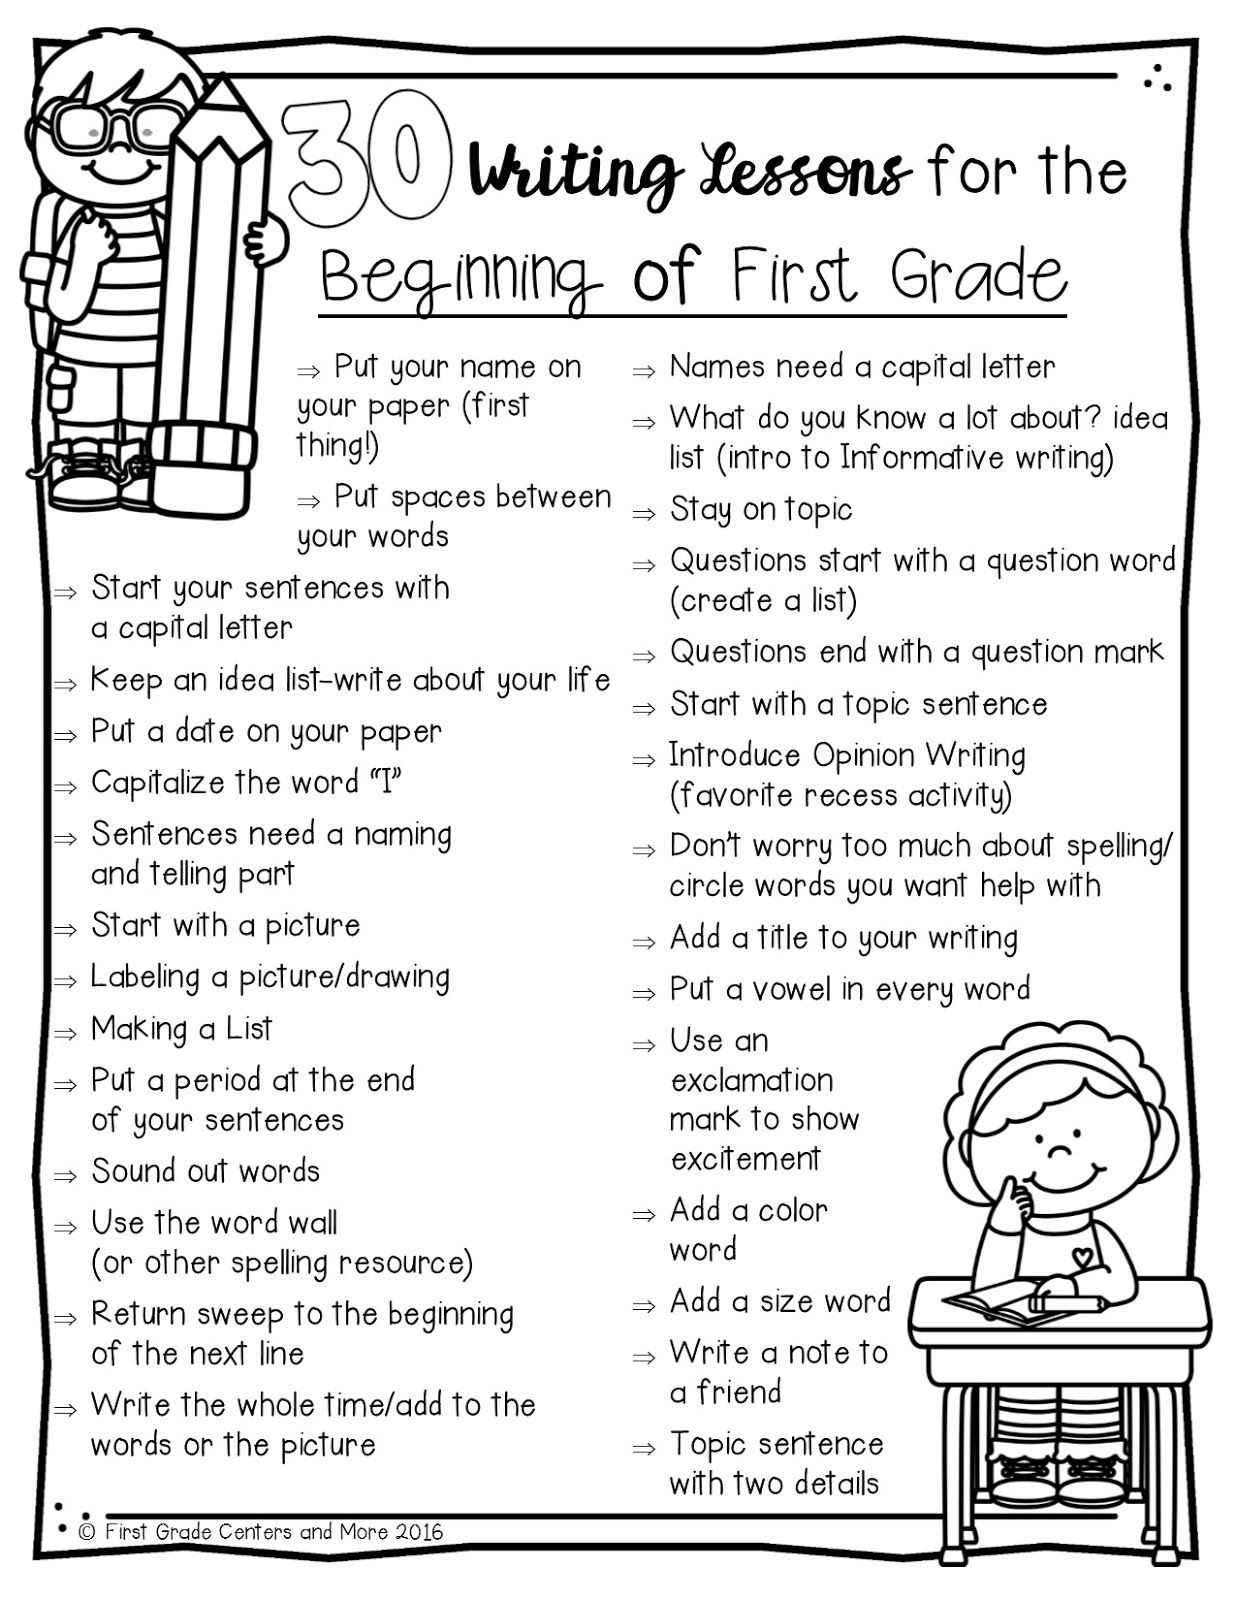 6 Tips For Teaching First Grade Writing | First Grade